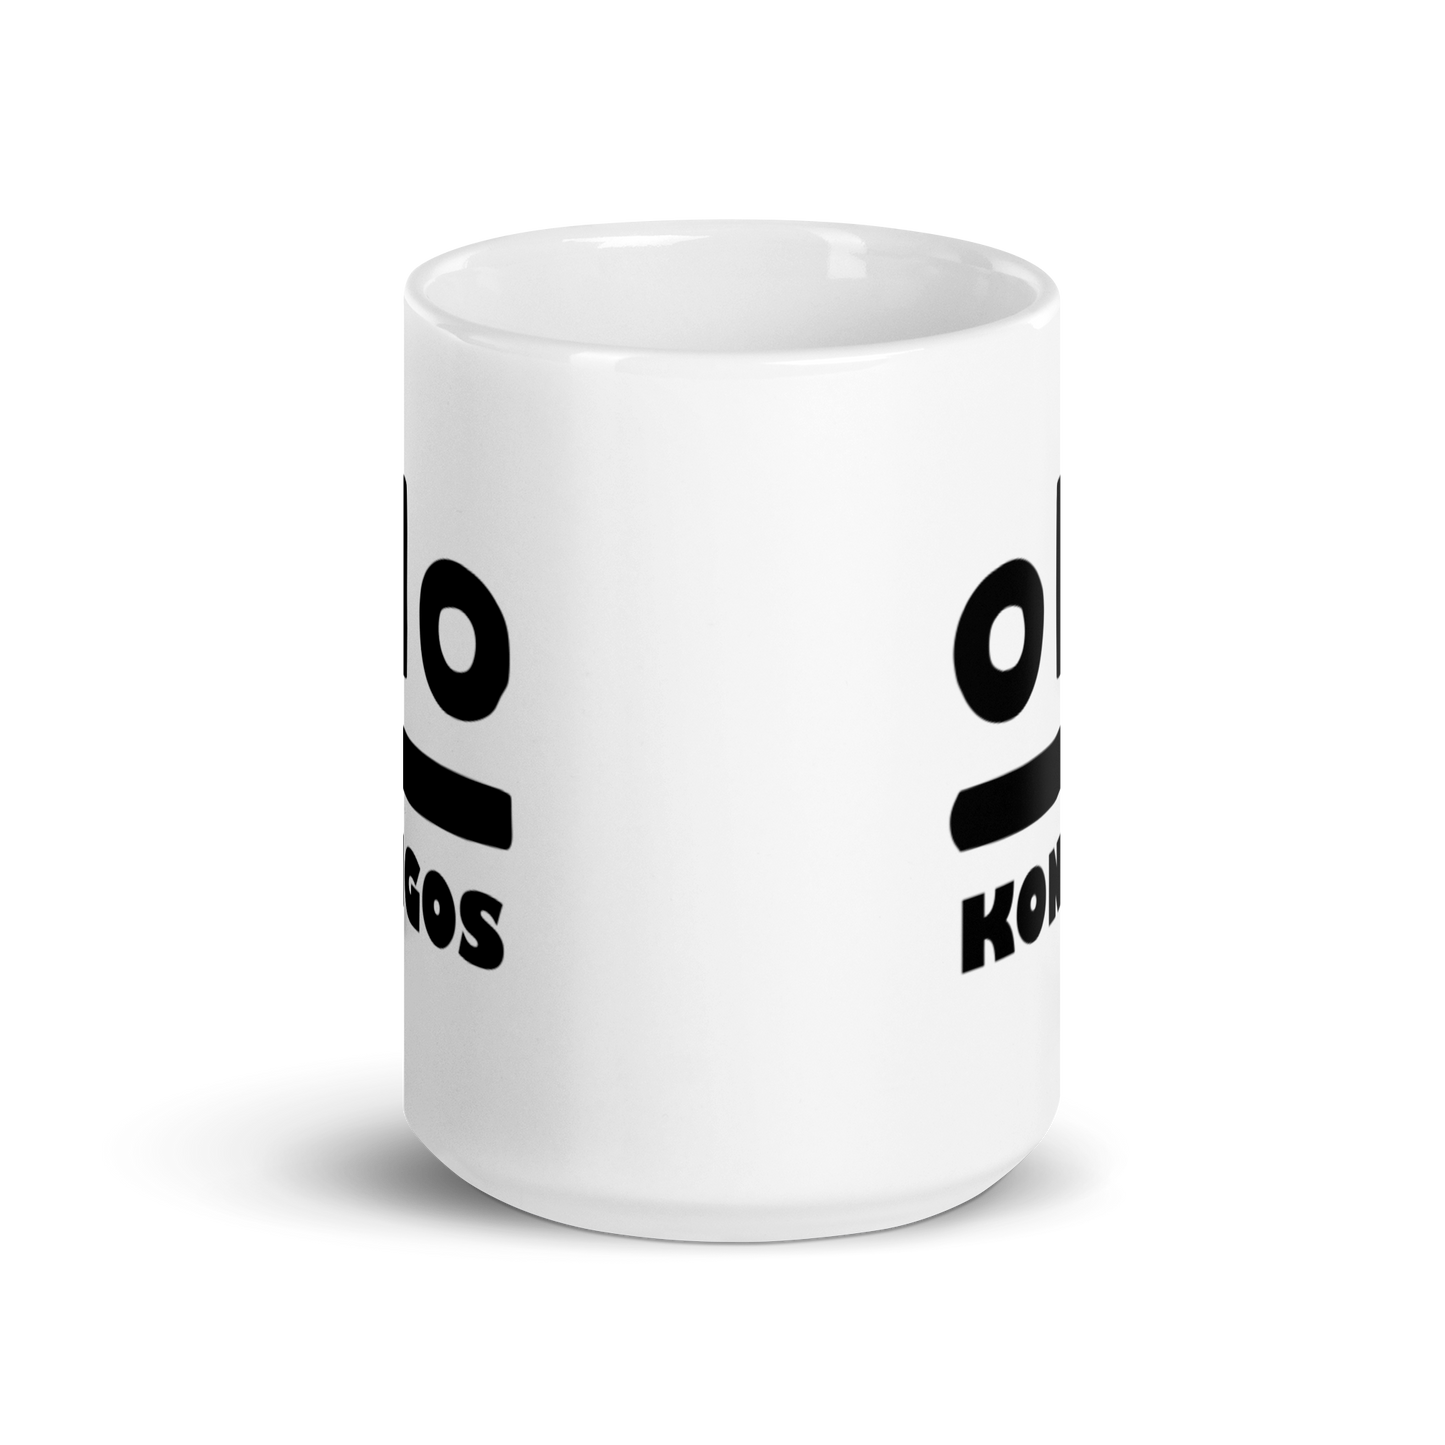 KONGOS Logo - Coffee Mug (White)